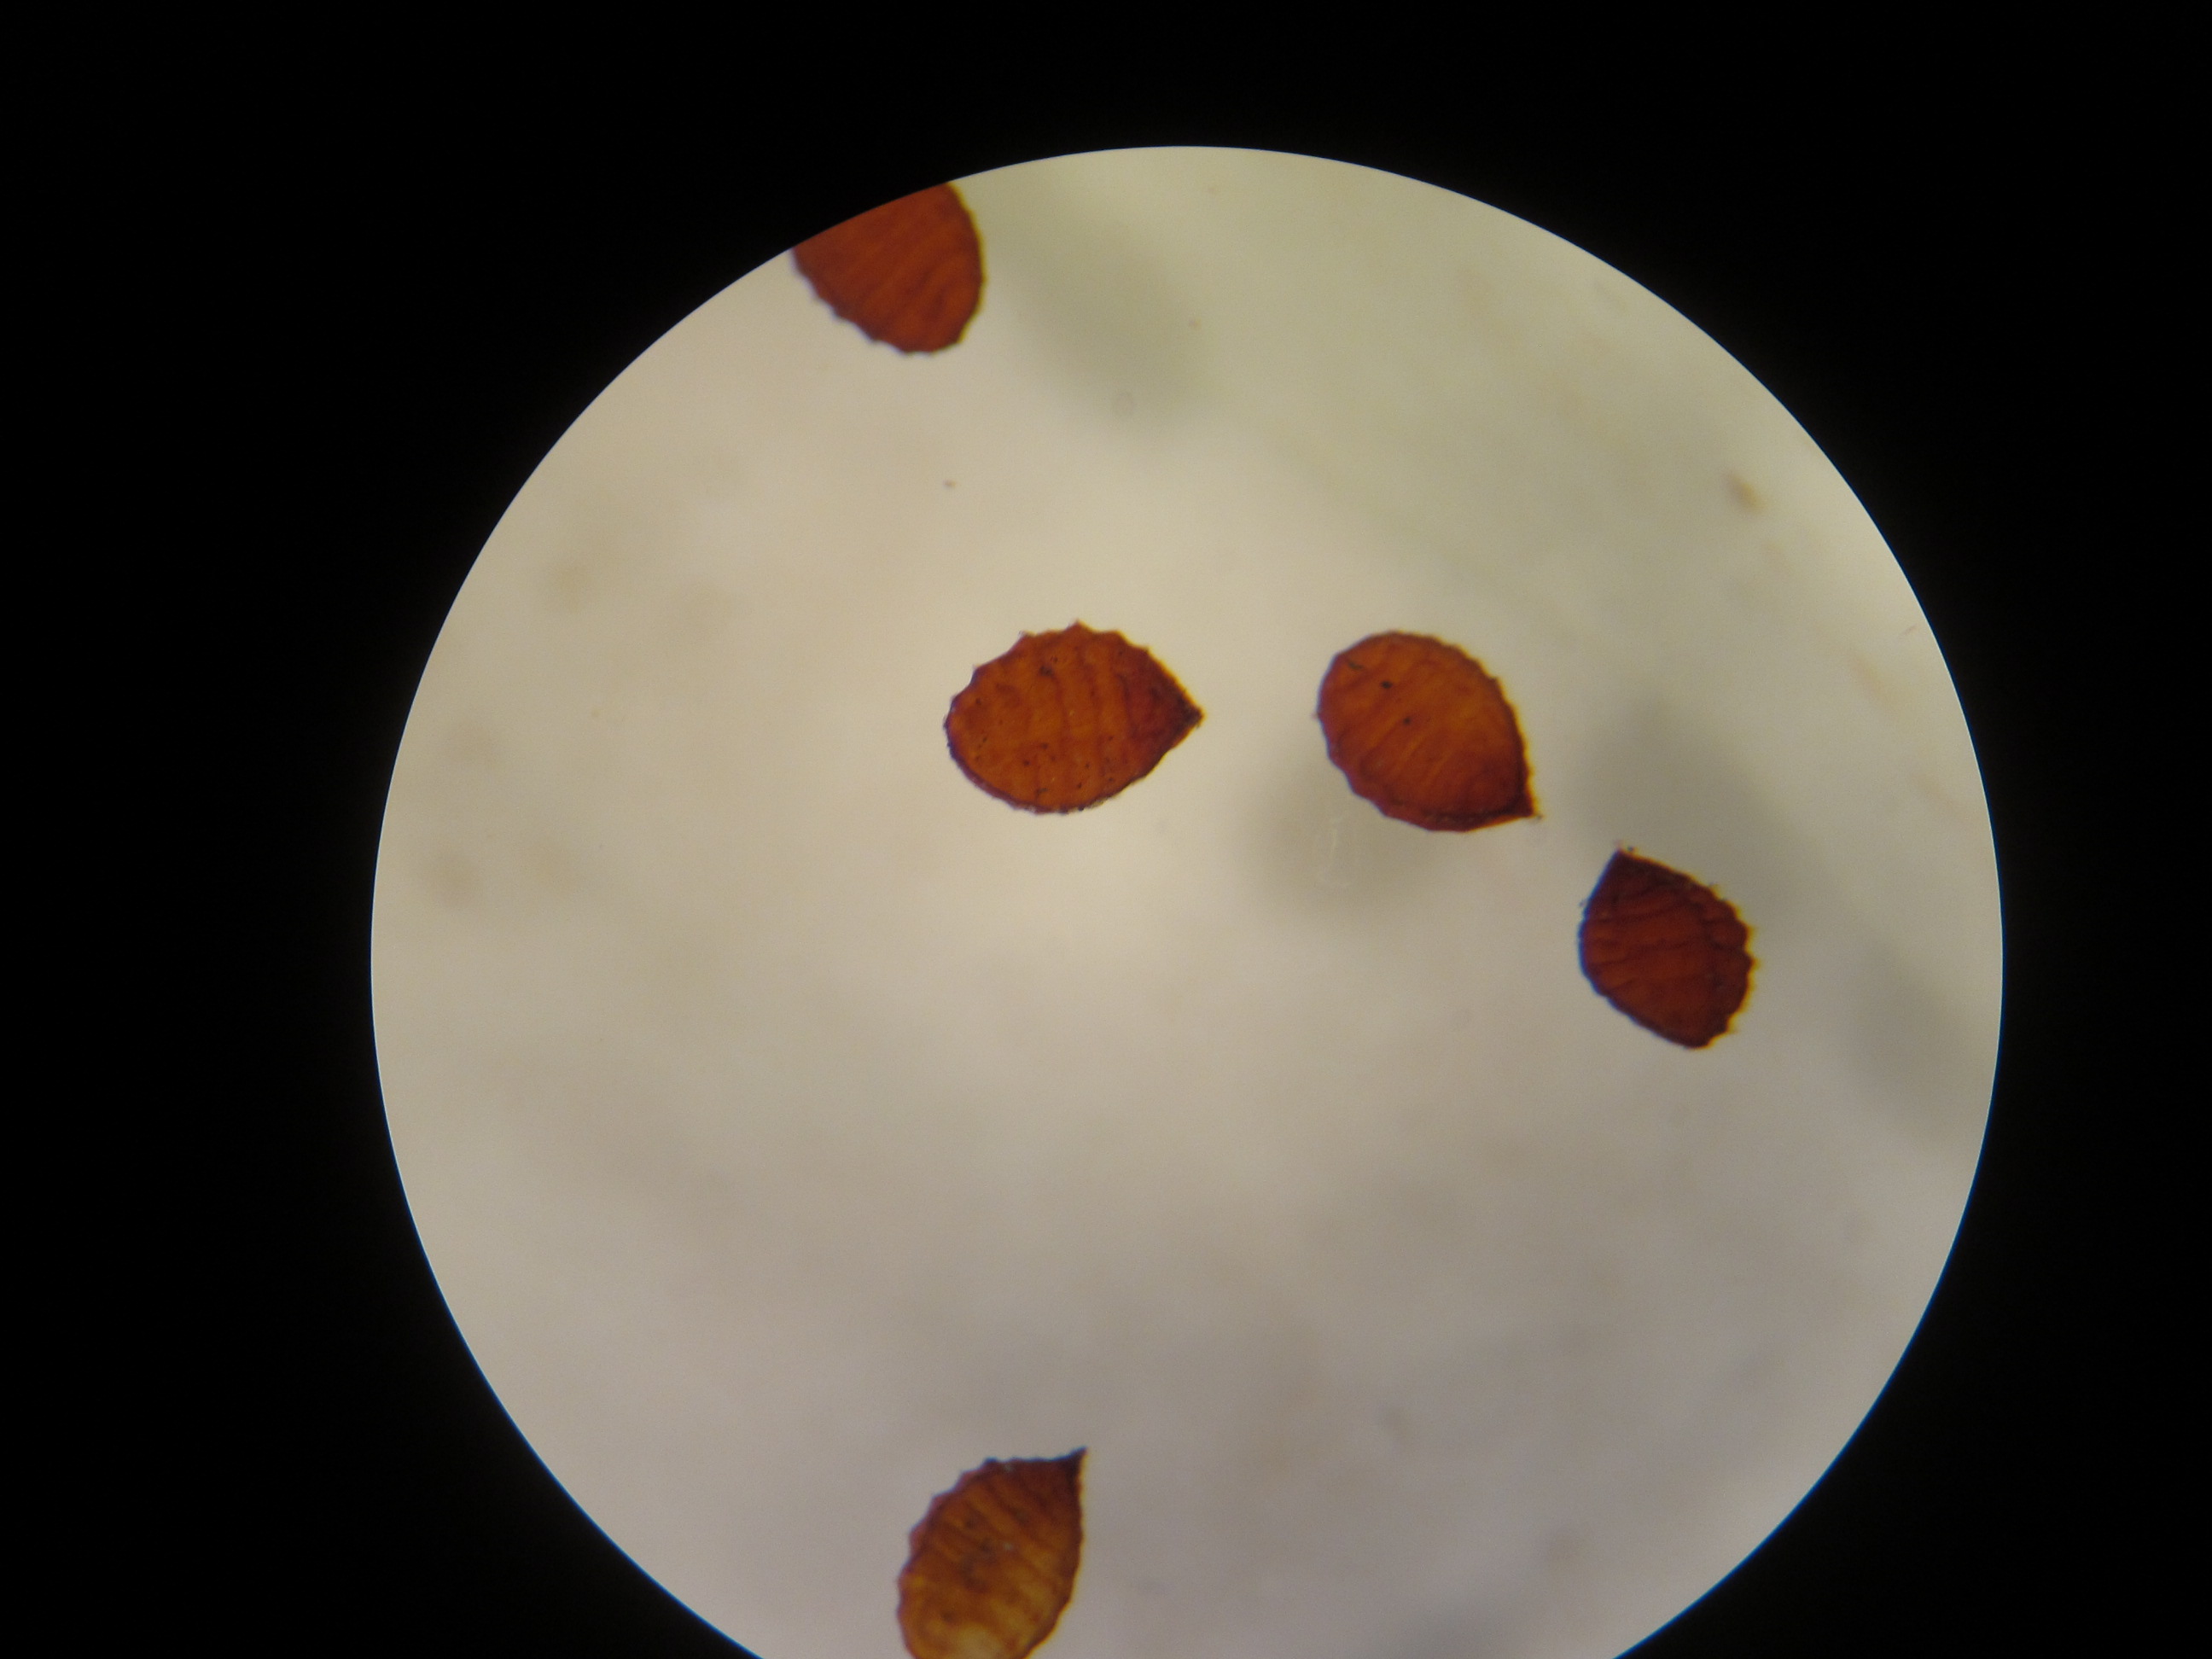 Oxalis seeds under microscope are teardrop shaped